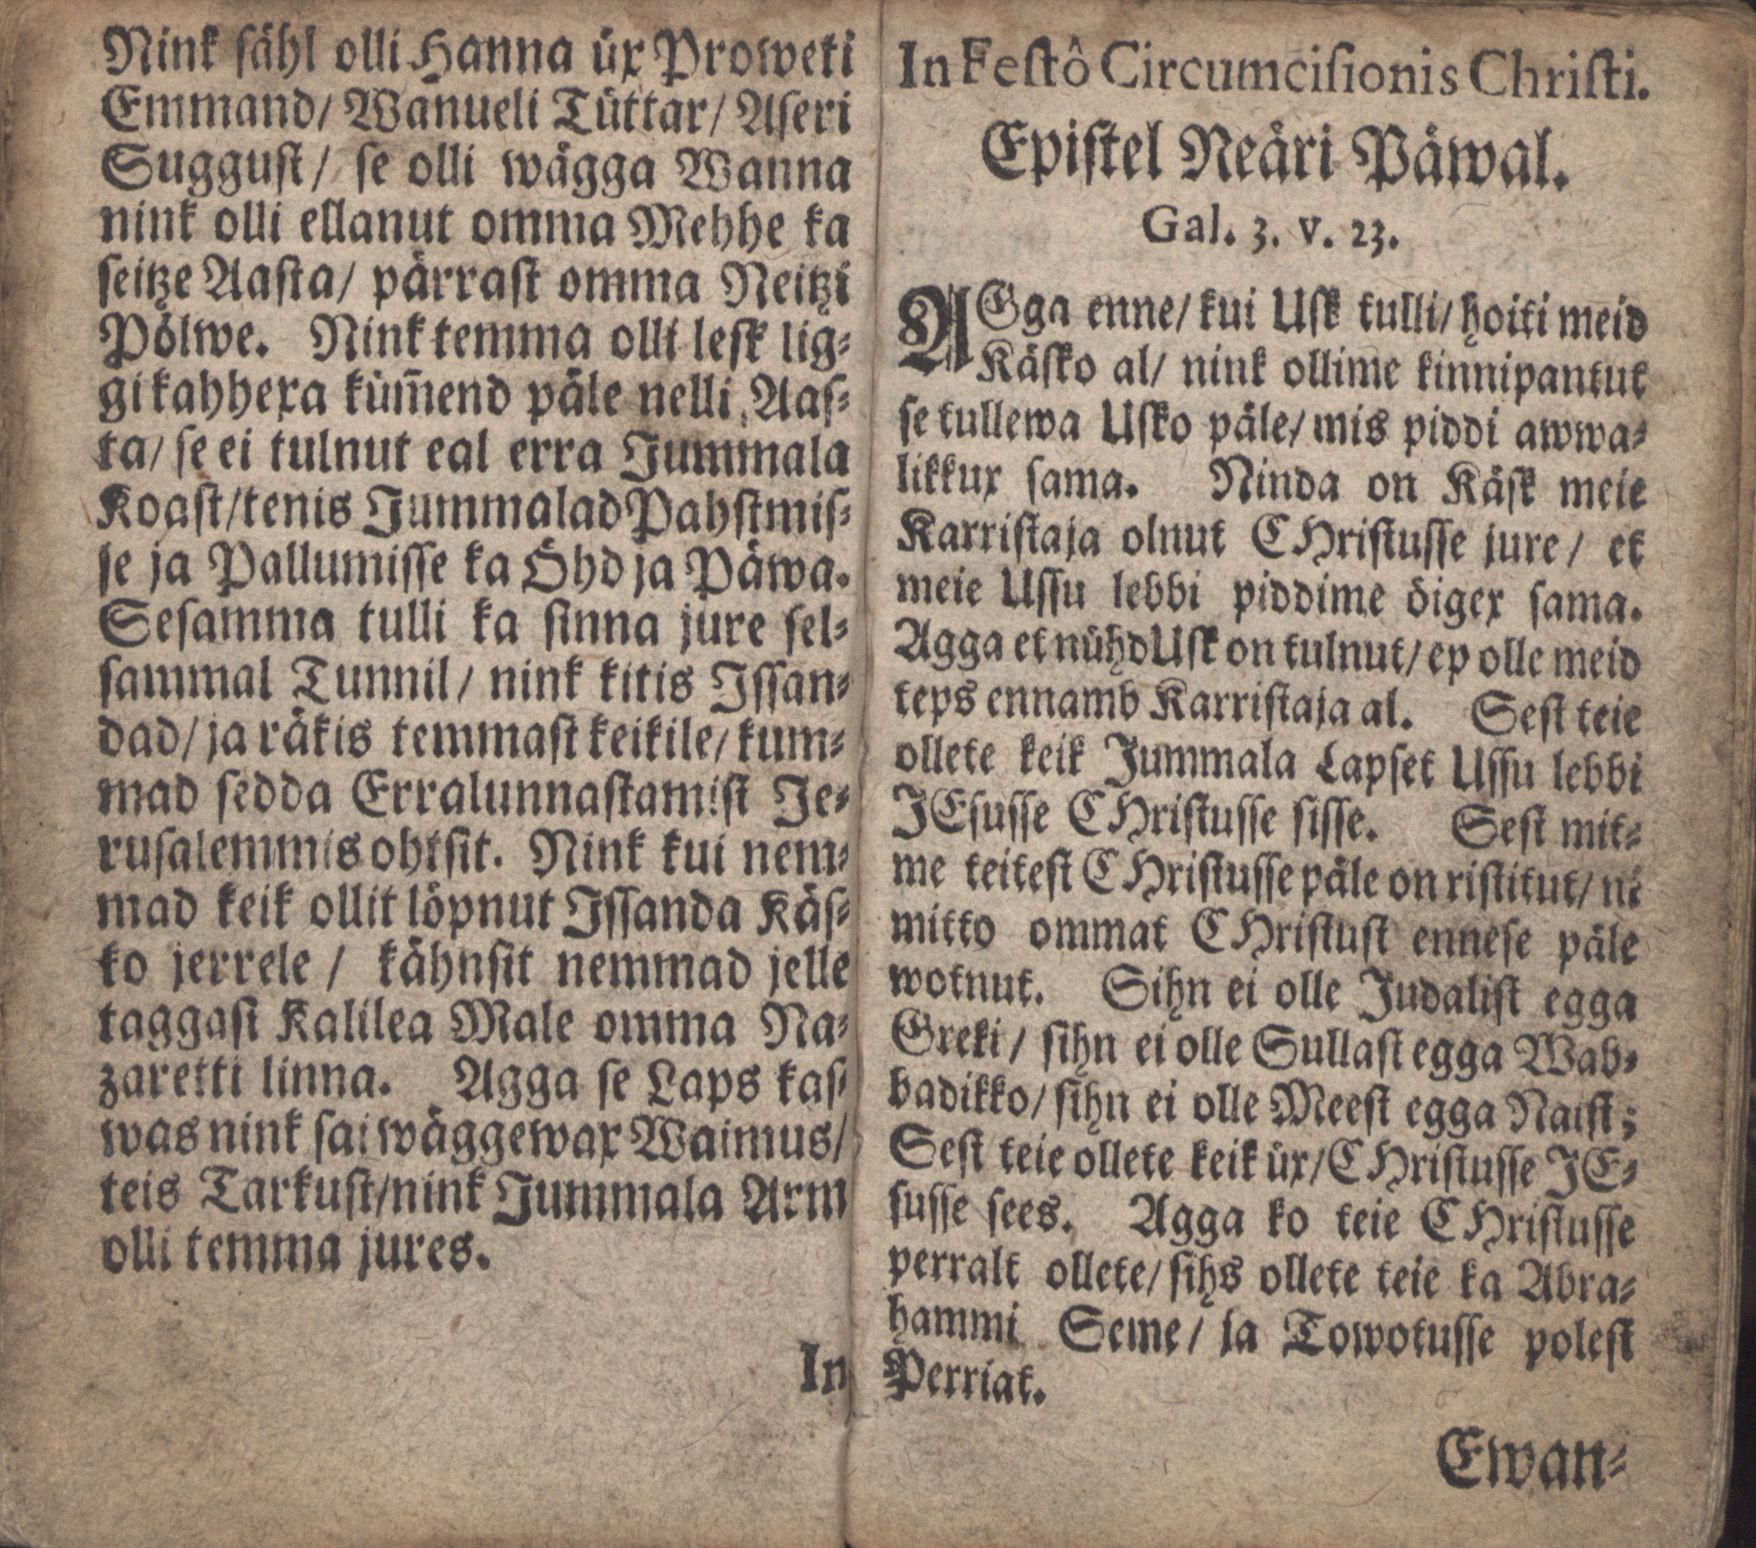 Ewangeliummit Nink Epistlit (1700) | 11. Основной текст